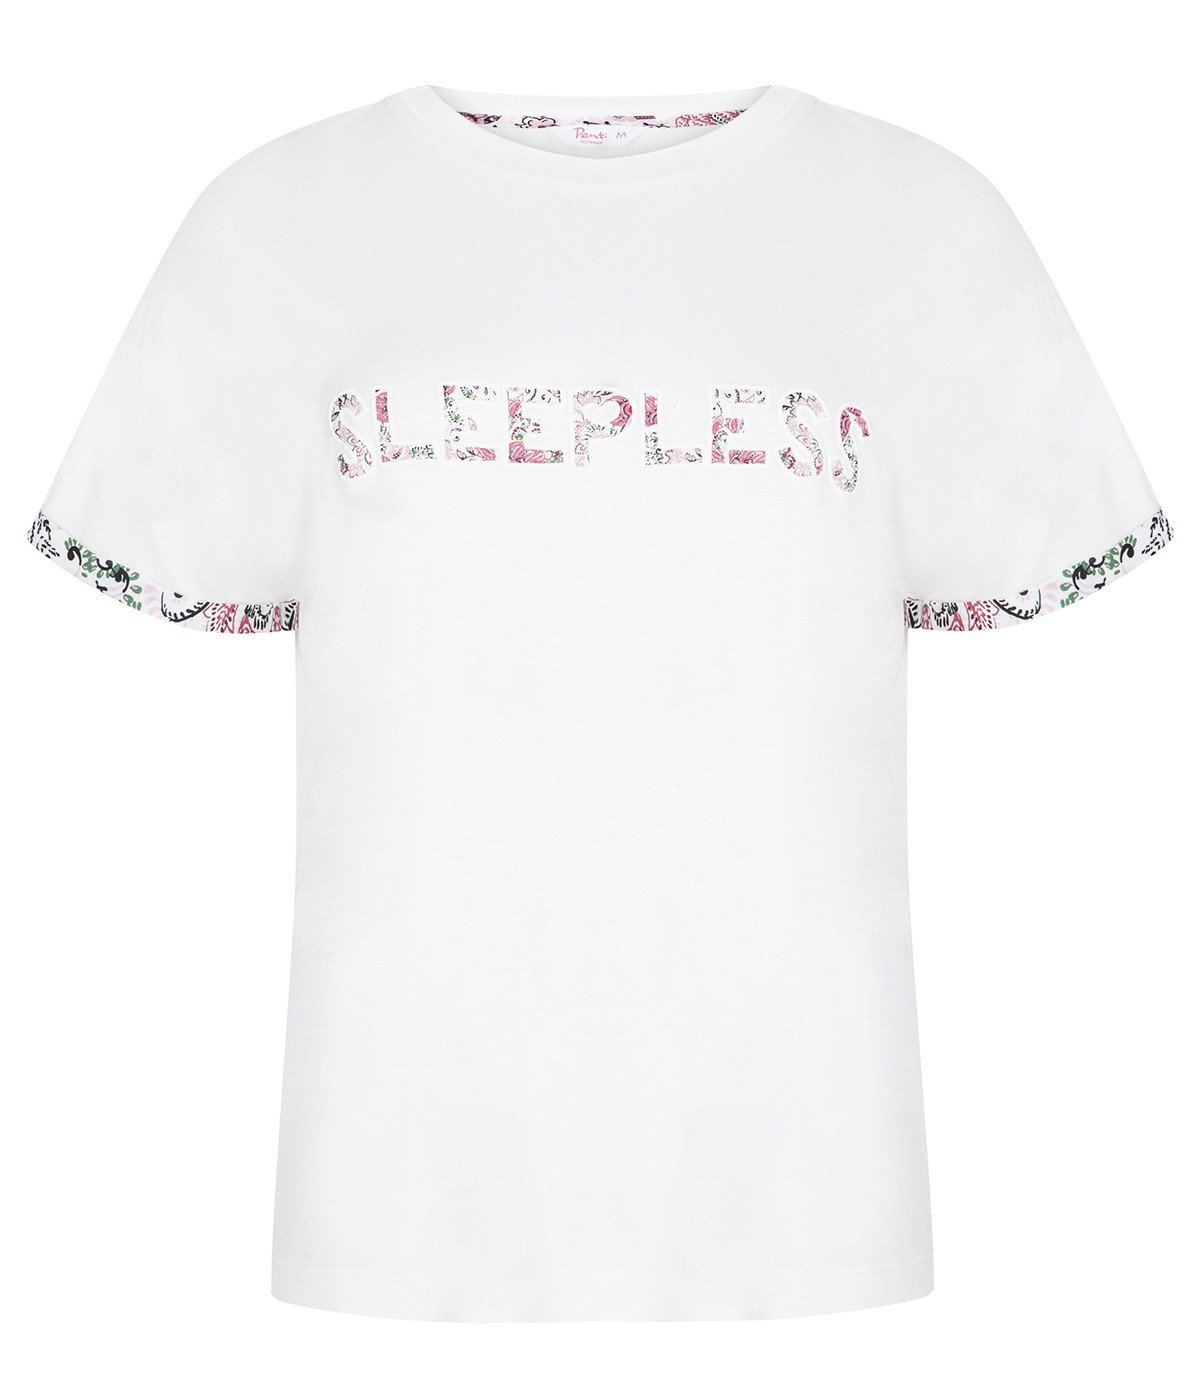 Sleeple T-Shirt